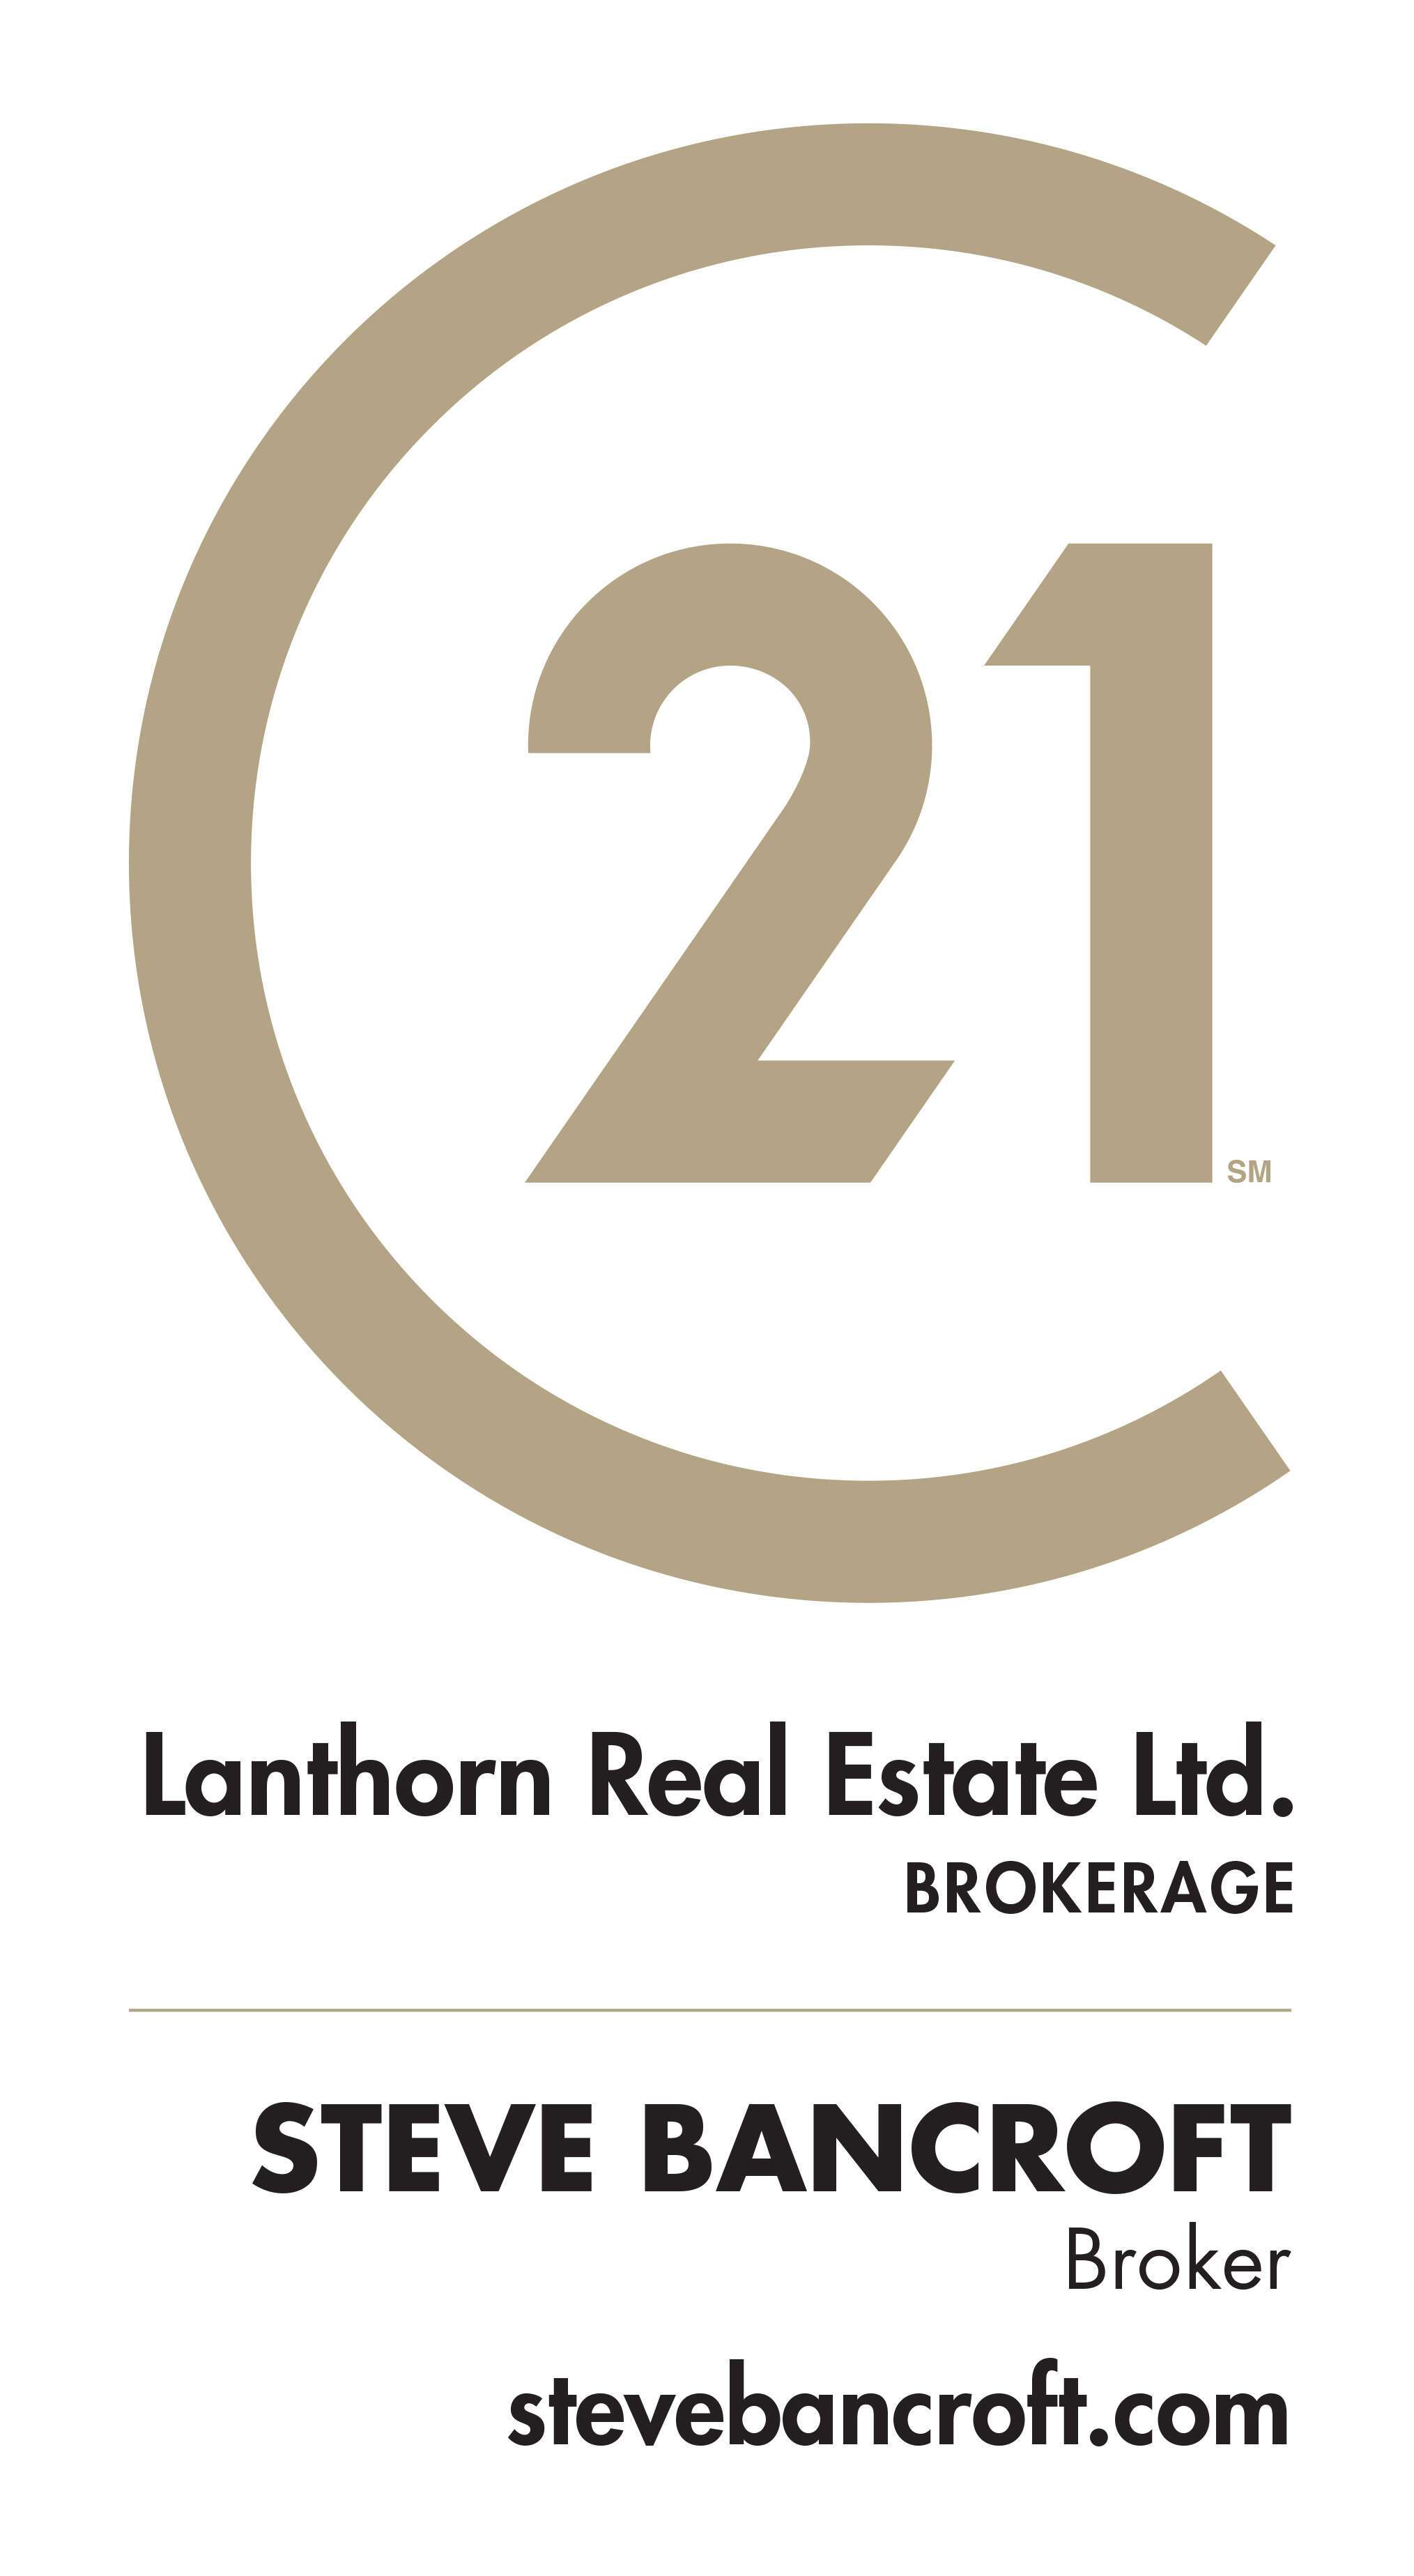 STEVE BANCROFT Broker CENTURY 21 Lanthorn Real Estate Ltd. Brokerage